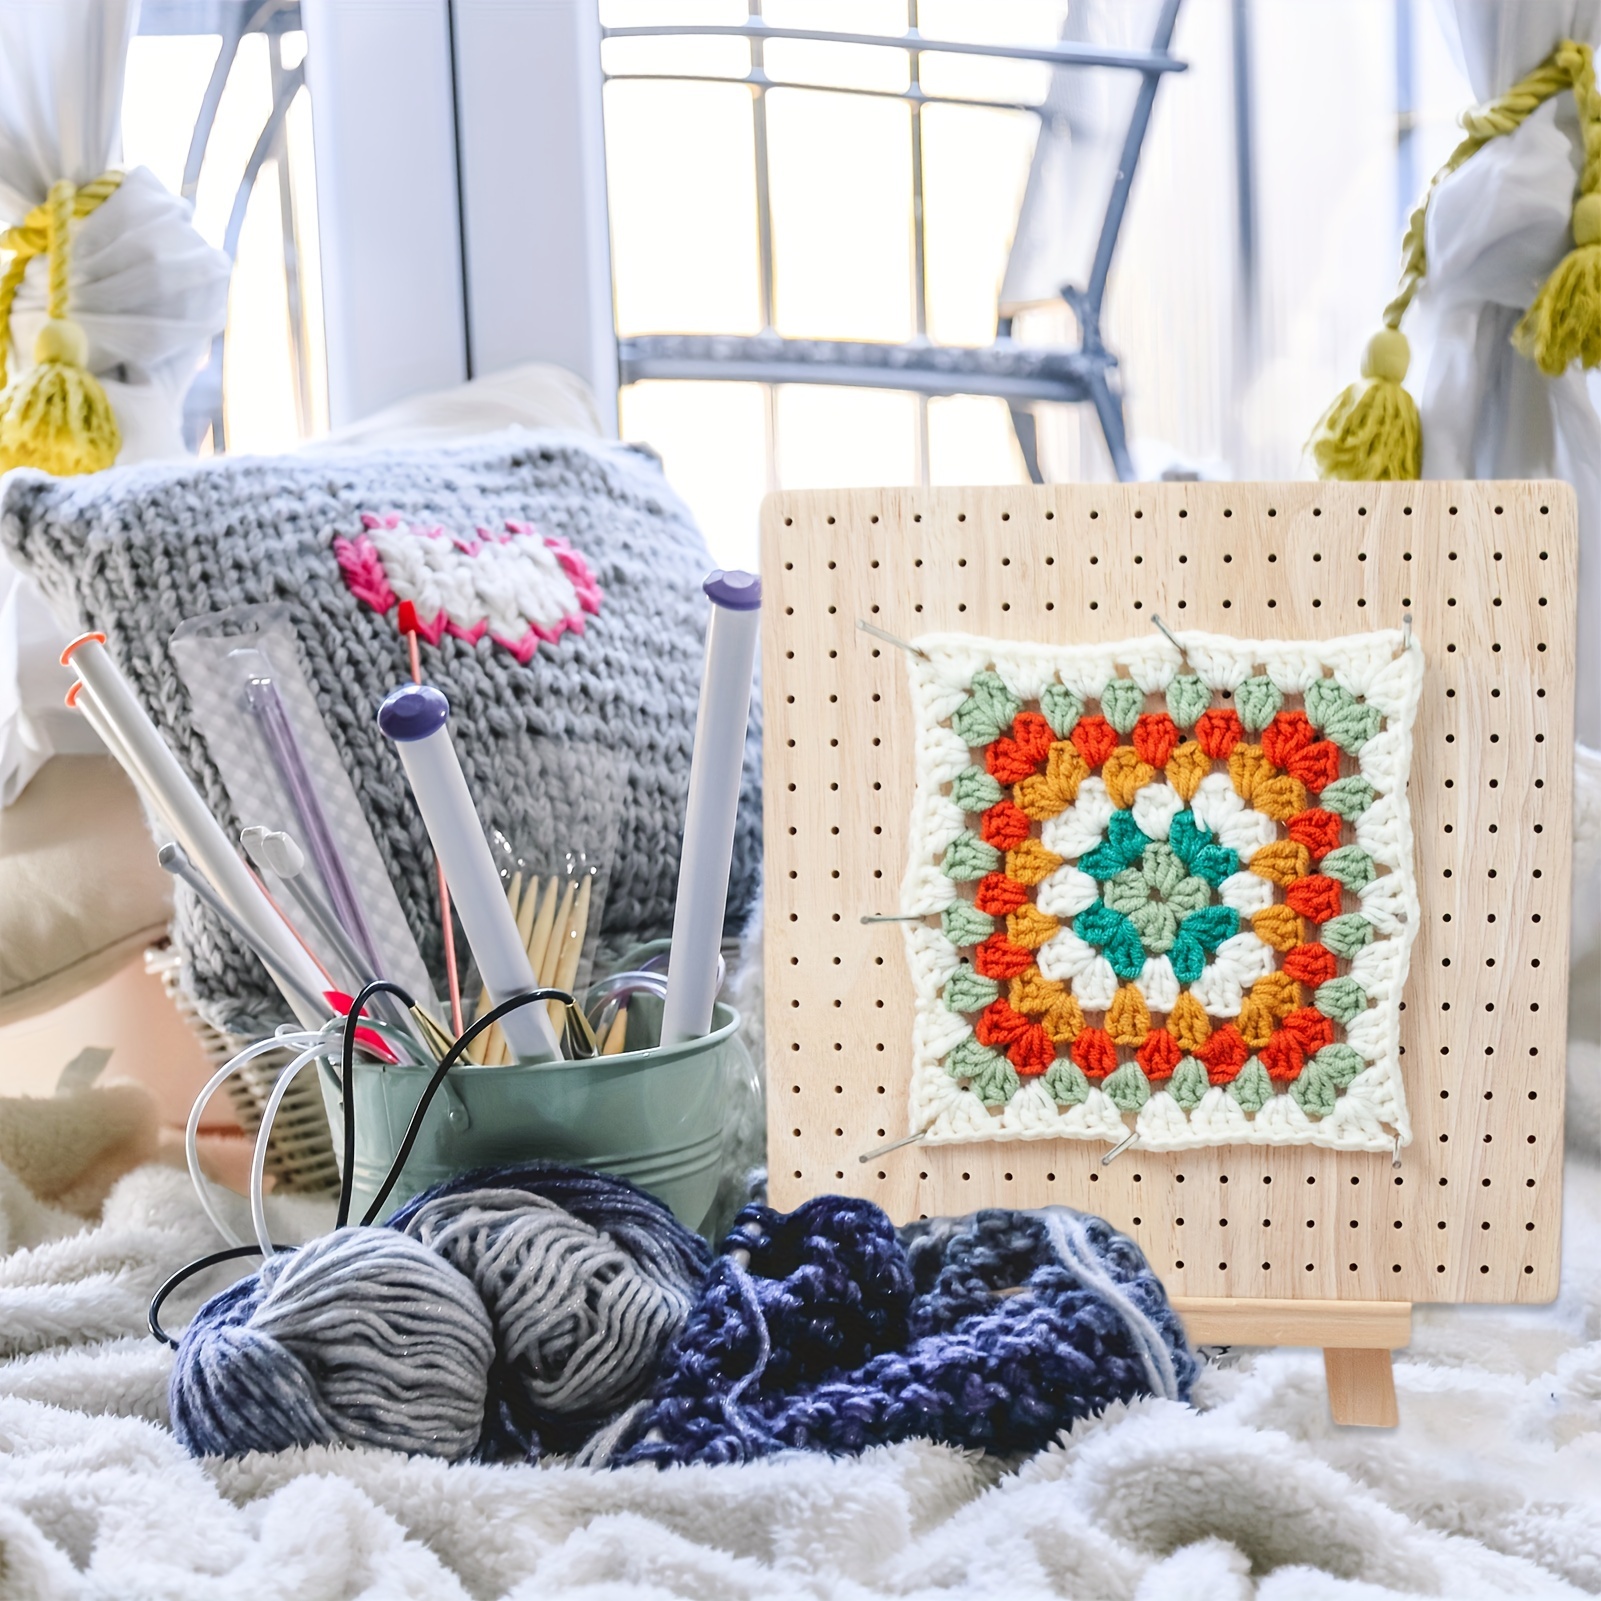 4pcs Crochet Kit For Beginners Adults, Crochet Flower Kits Coasters,  Knitting Kit With Crochet Hook, Crochet Yarn, Instruction, For Crochet  Floral Cup